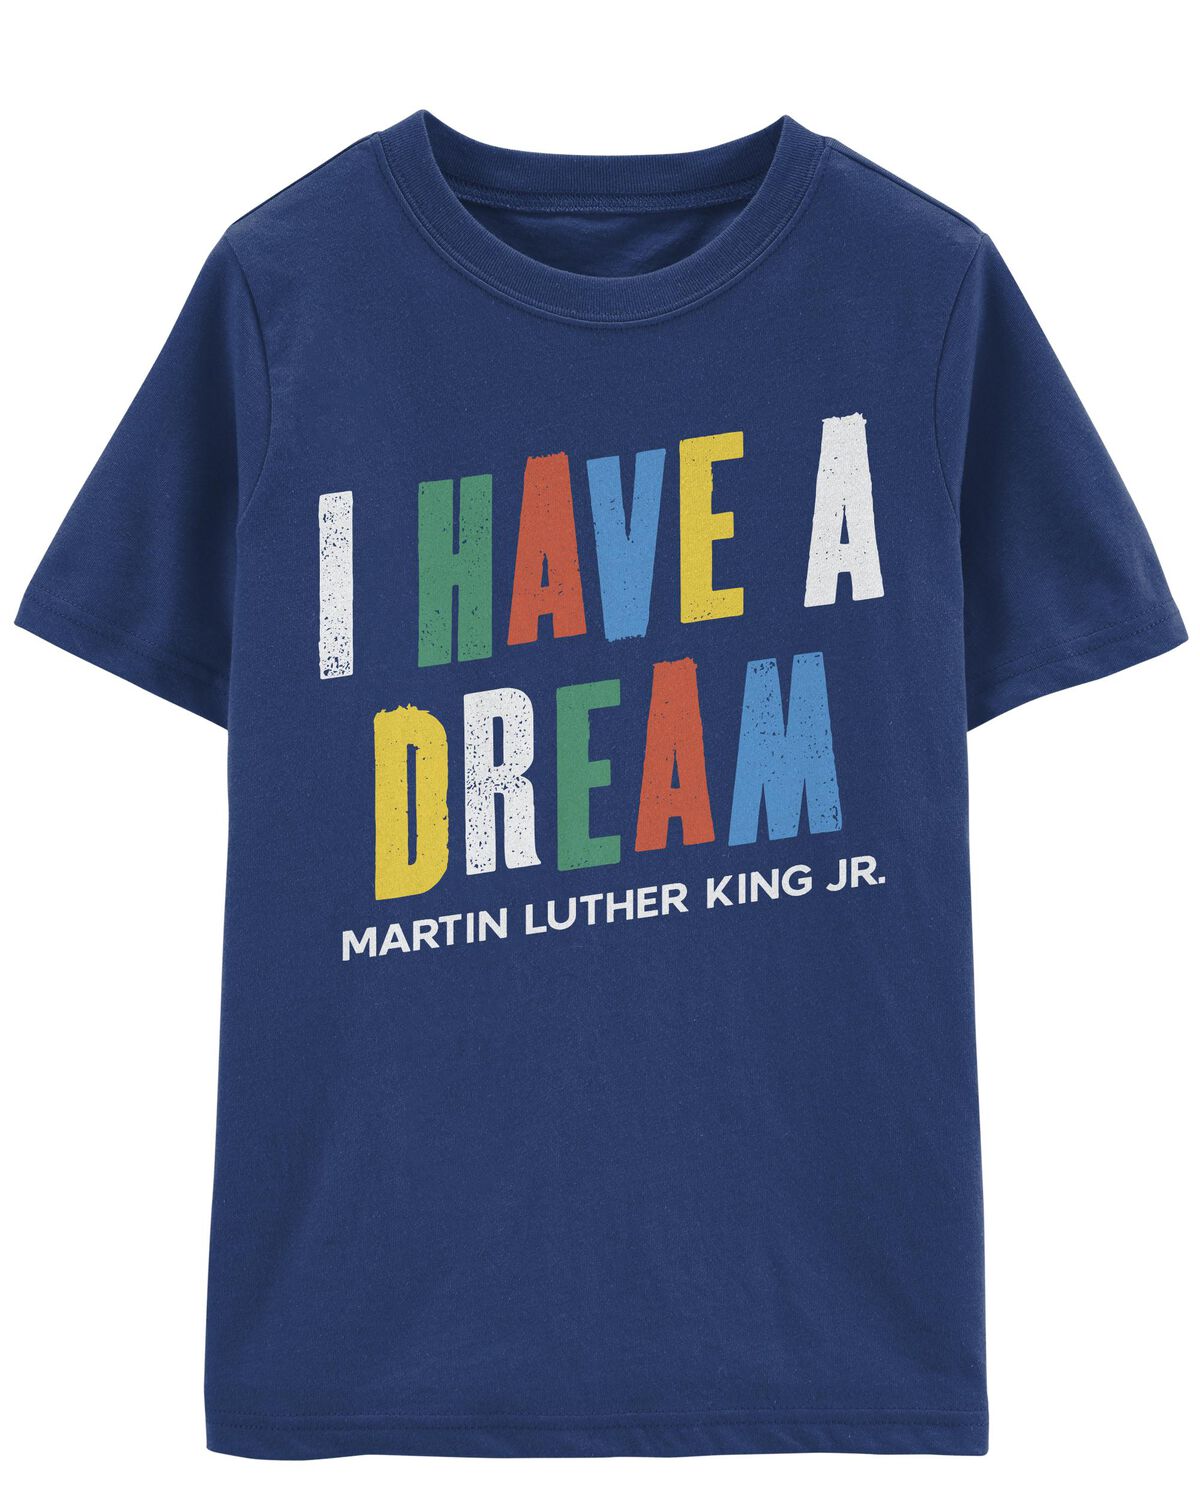 Kid MLK I Have A Dream Tee